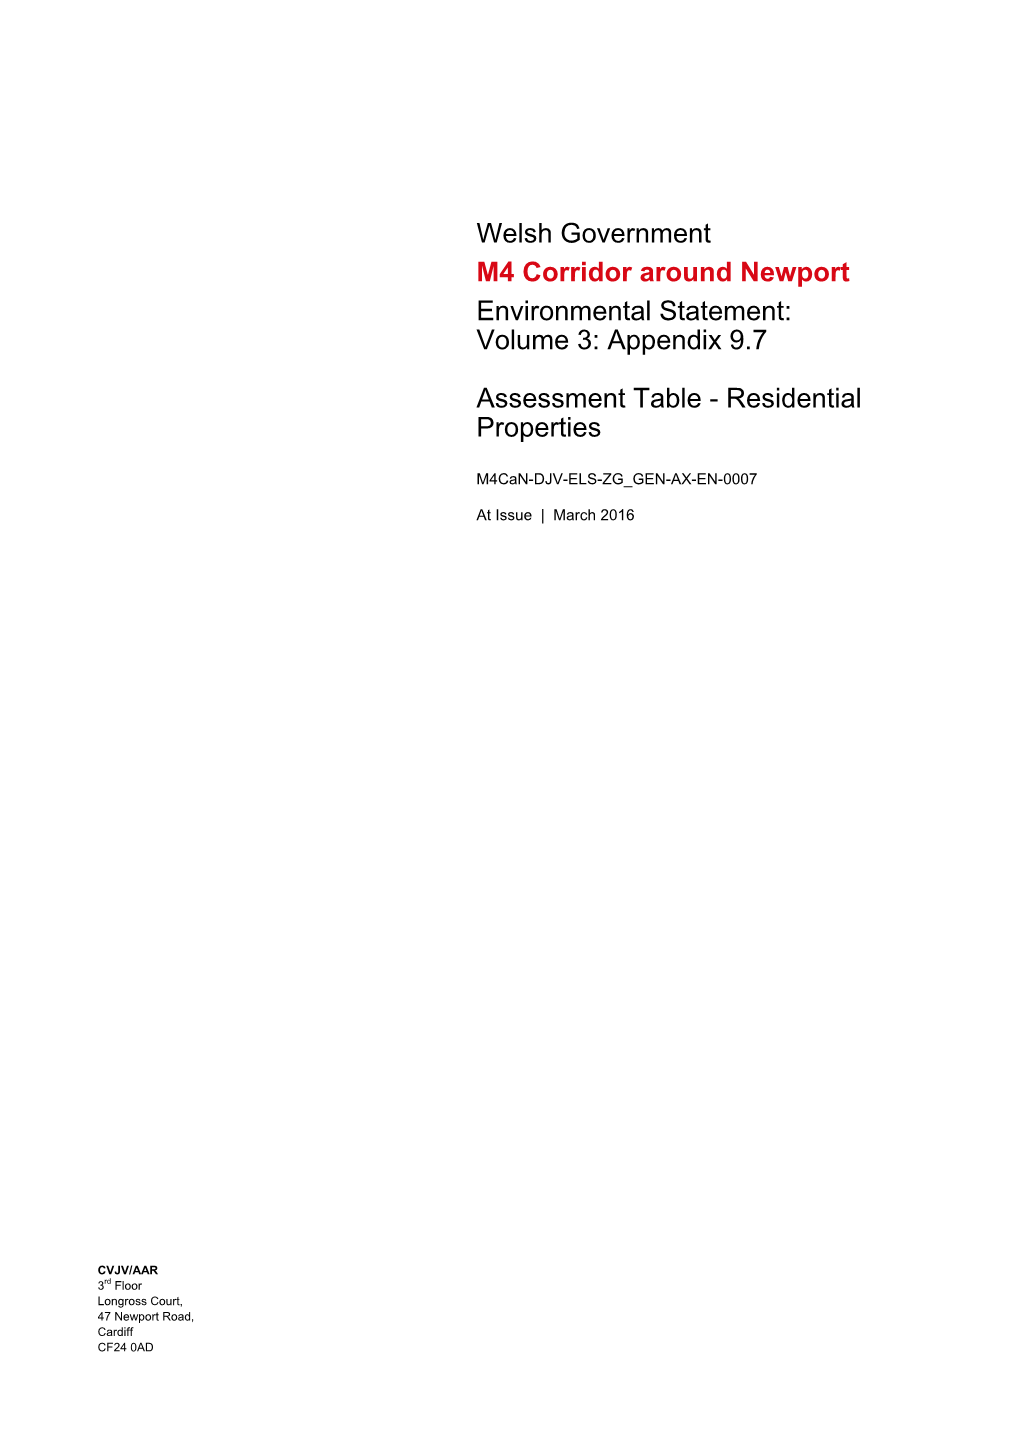 Welsh Government M4 Corridor Around Newport Environmental Statement: Volume 3: Appendix 9.7